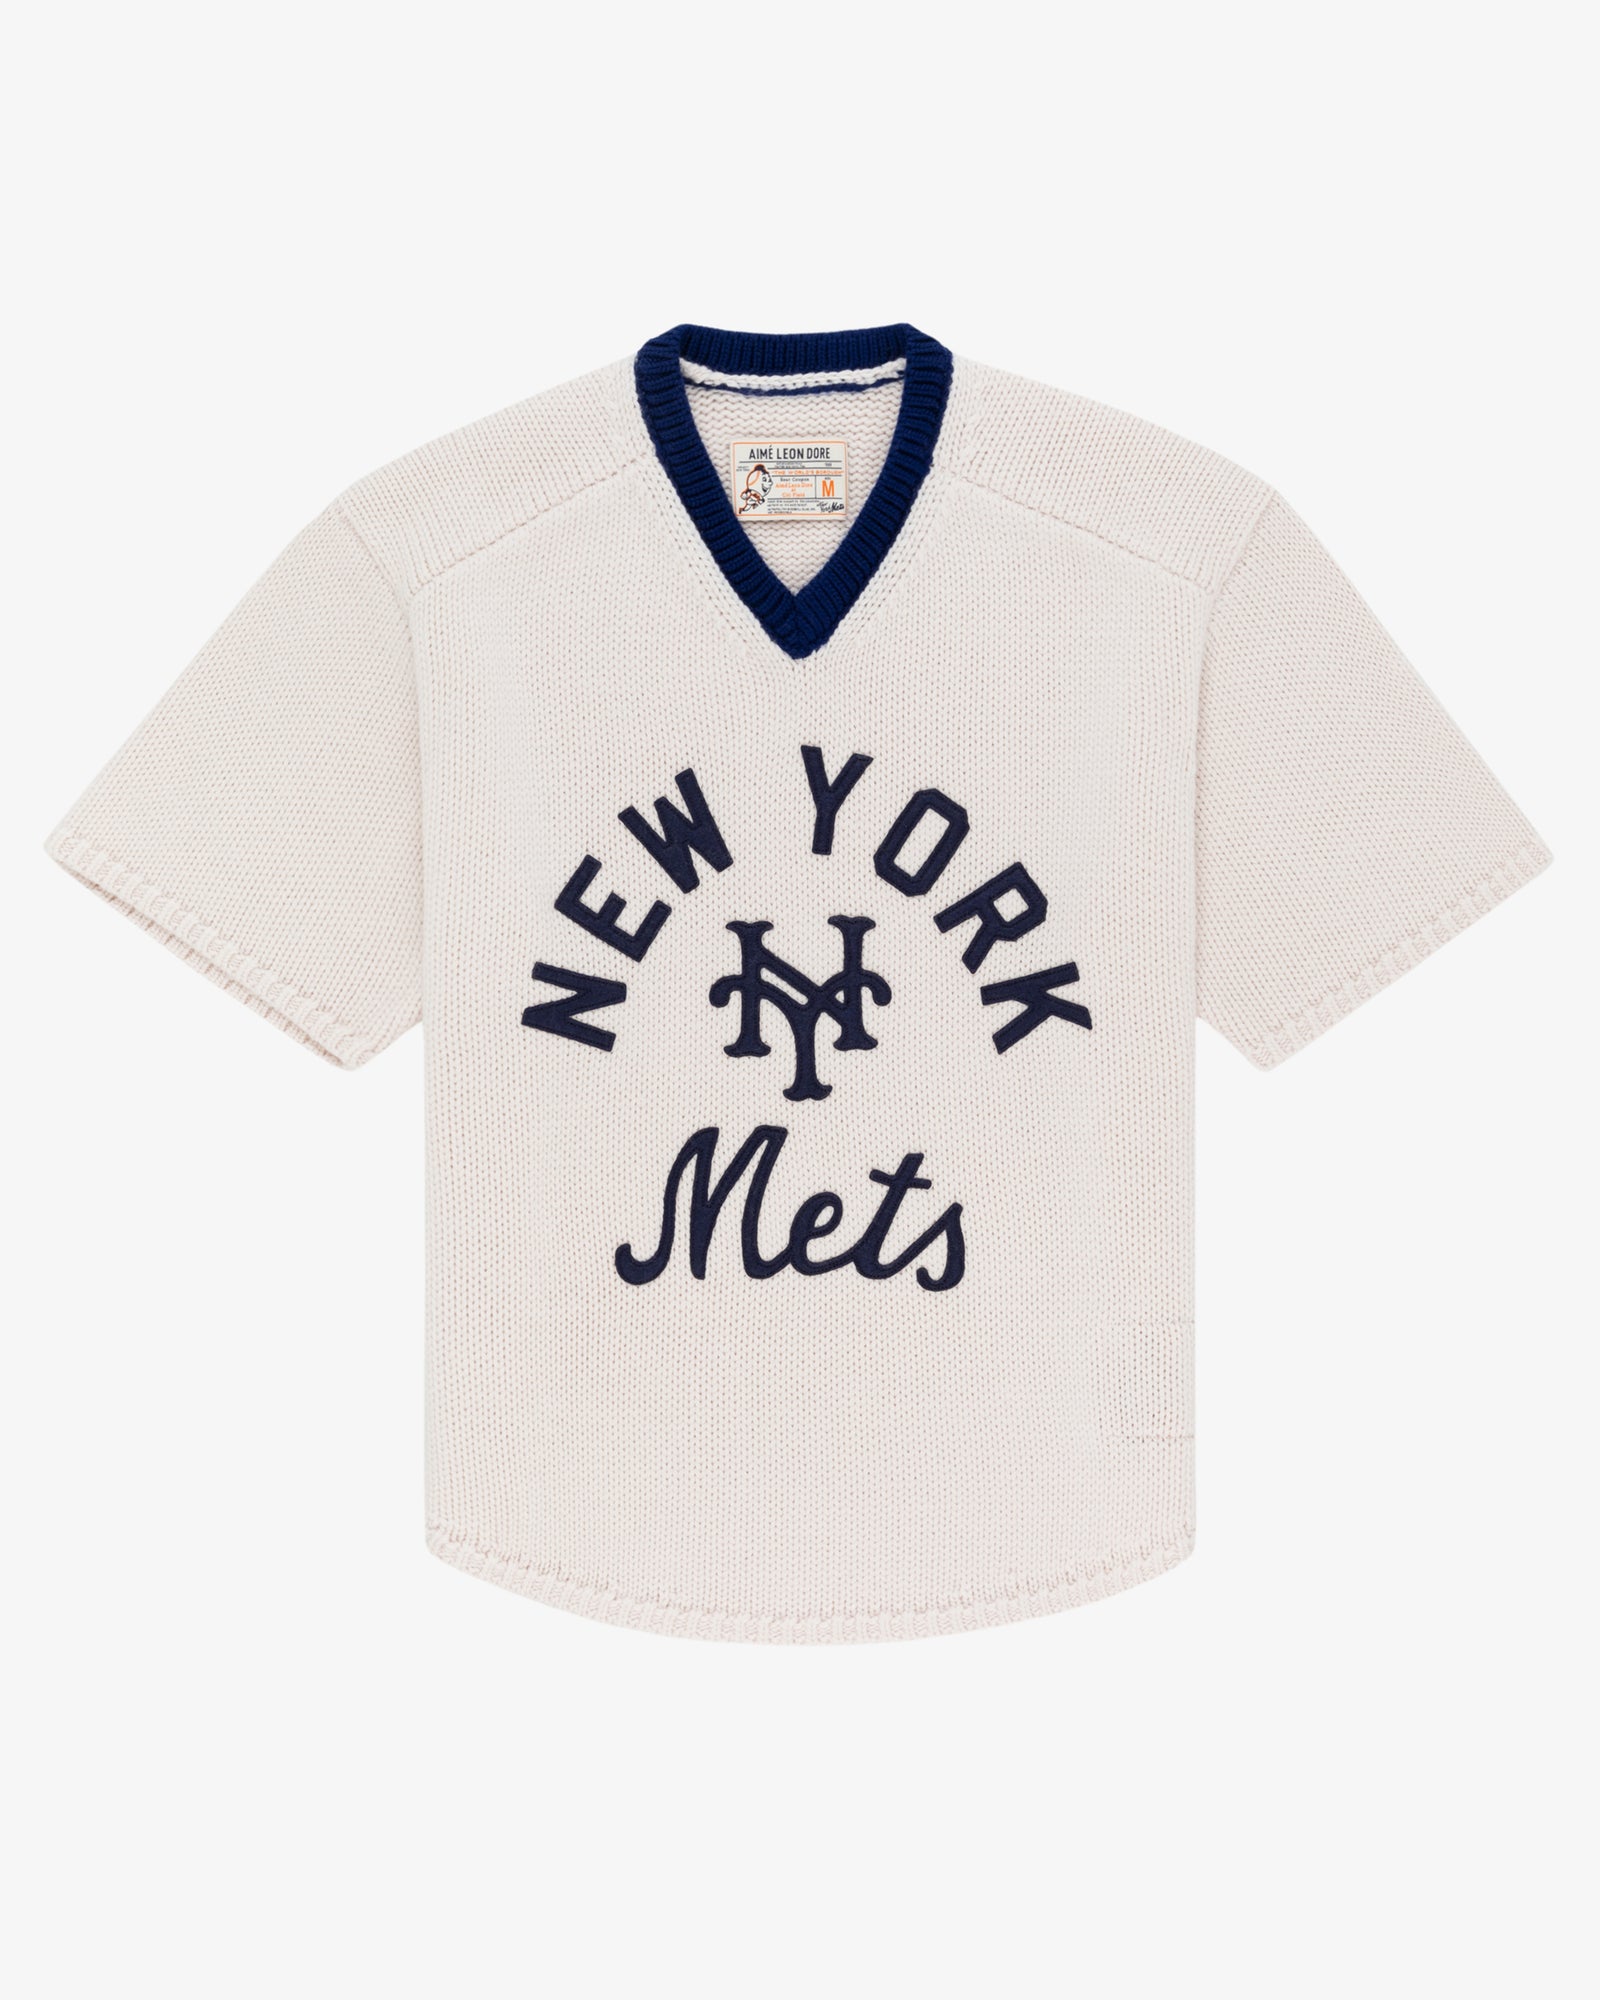 ALD / New York Mets Short-Sleeve Knit Sweater